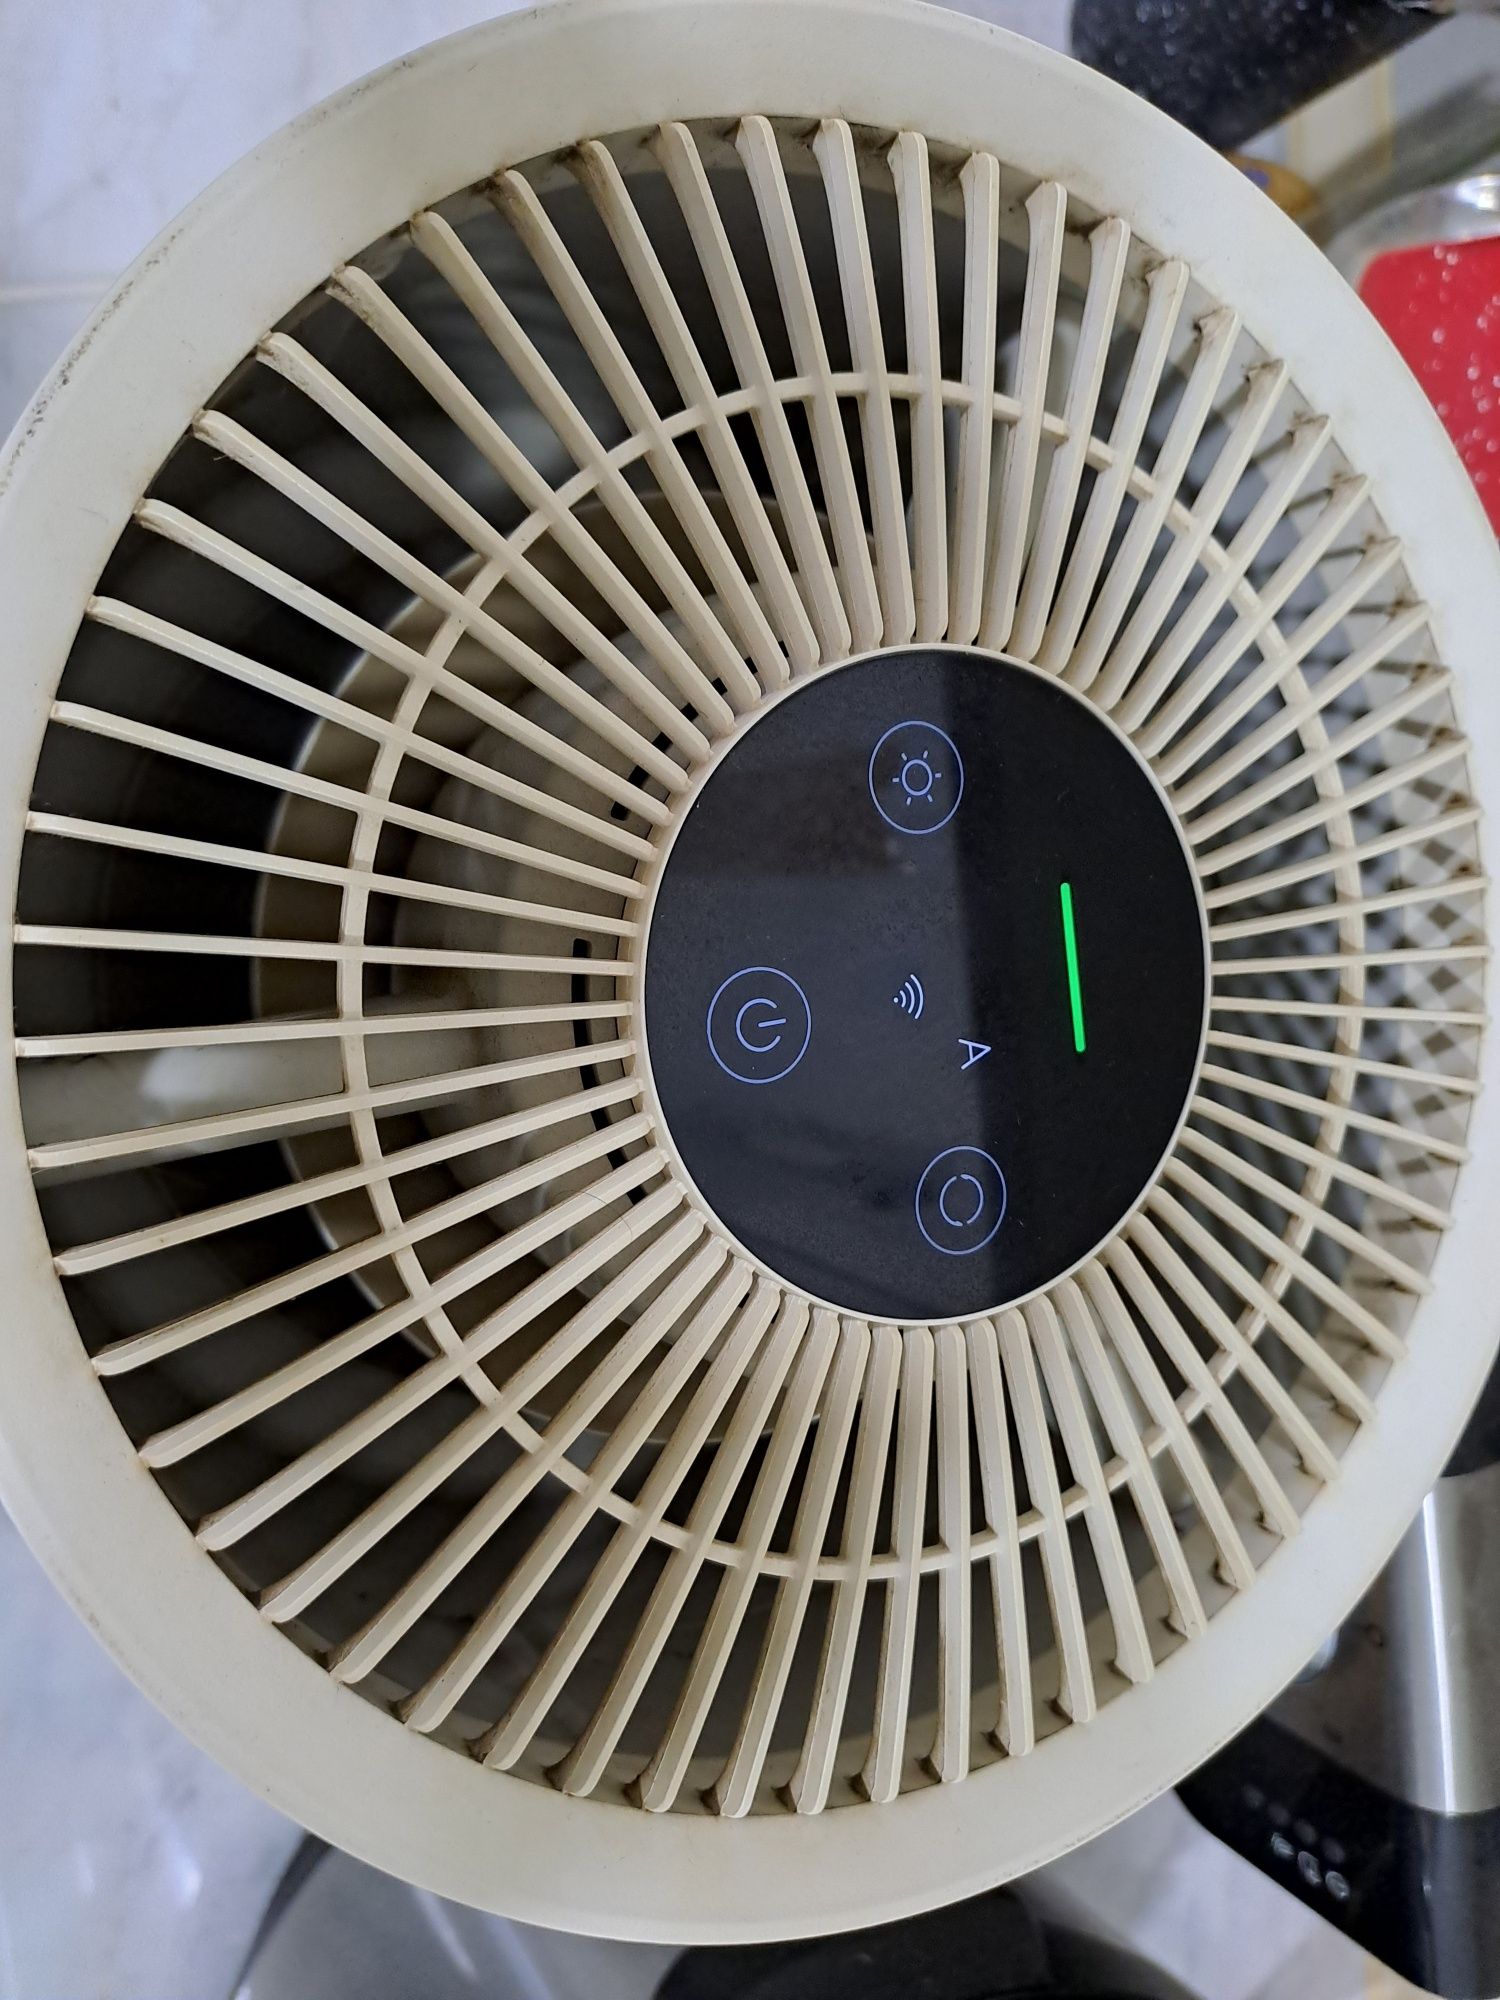 Очиститель воздуха xiaomi air purifier 4 compact eu